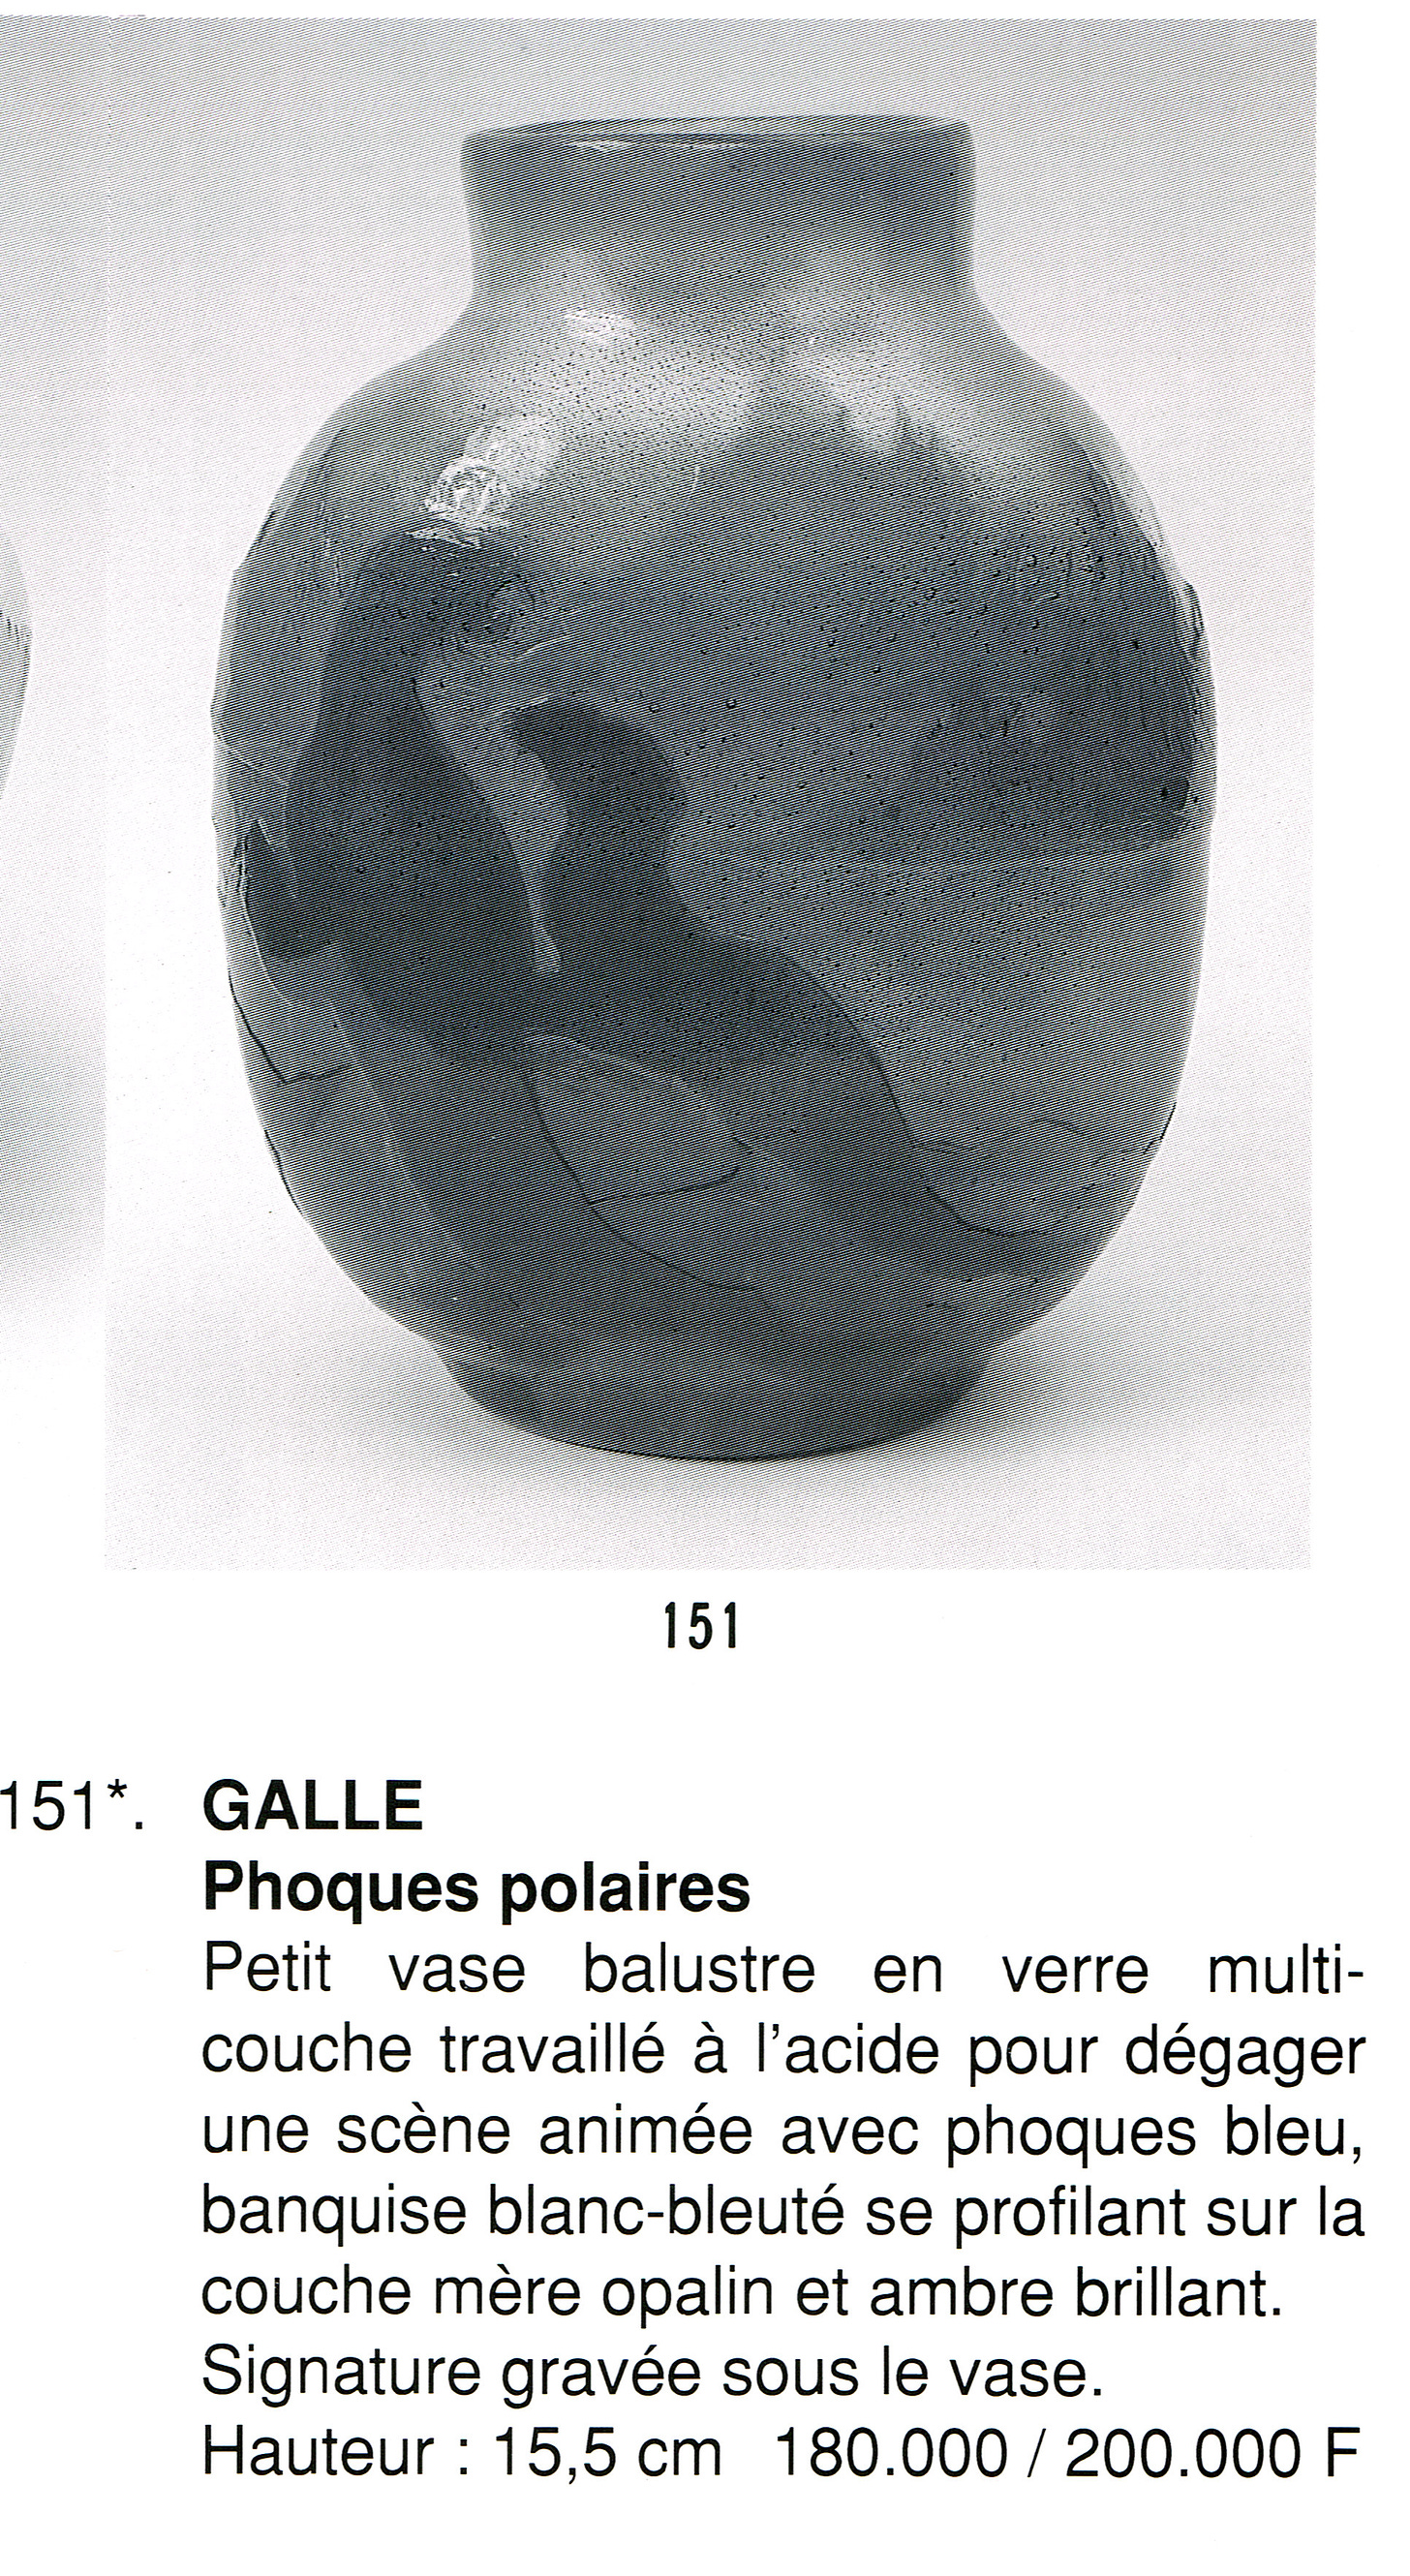 Établissements Gallé, Polar seals, original notice from the auctions catalogue Ader Picard Tajan and Est Ouest, Tokyon, 1990-11-20 lot 151 (© Ader Picard Tajan).